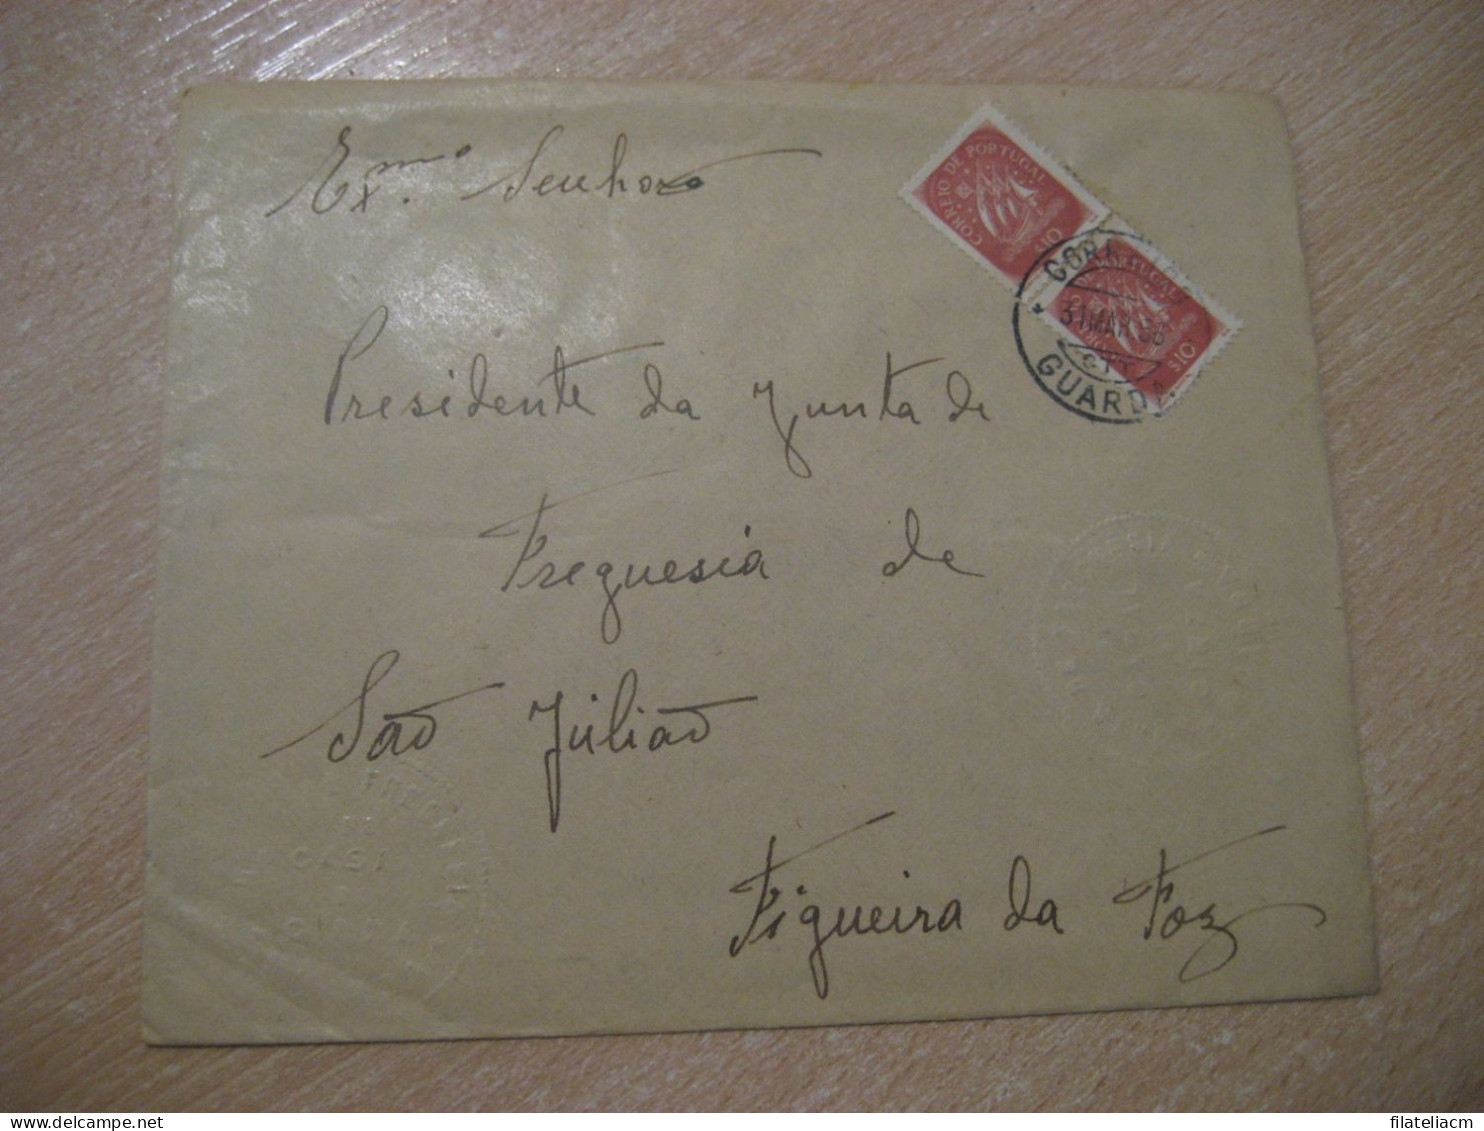 GUARDA 1956 To Figueira Da Foz Junta De Freguesia De Sao Juliao Cancel Cover PORTUGAL - Lettres & Documents